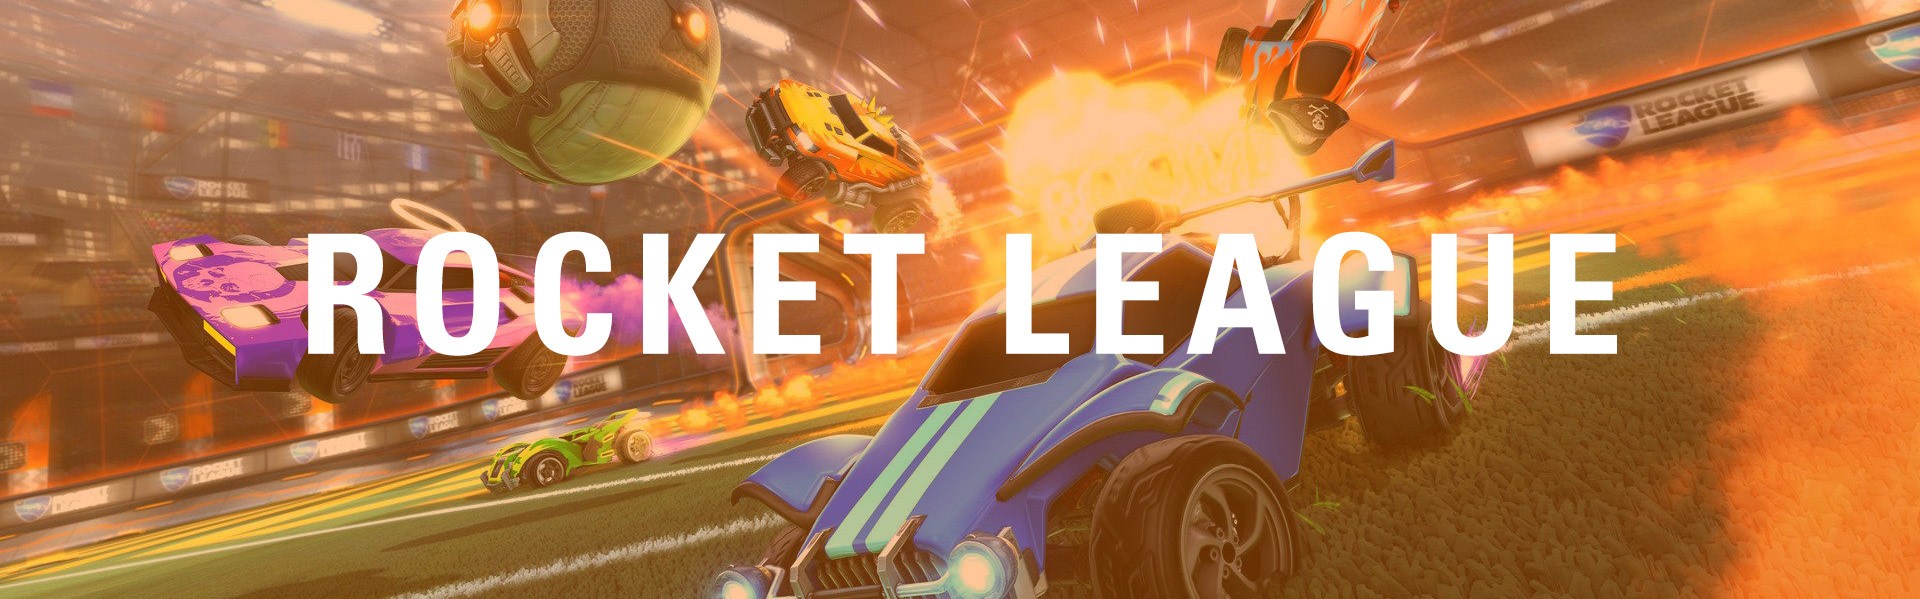 Rocket-league-banner